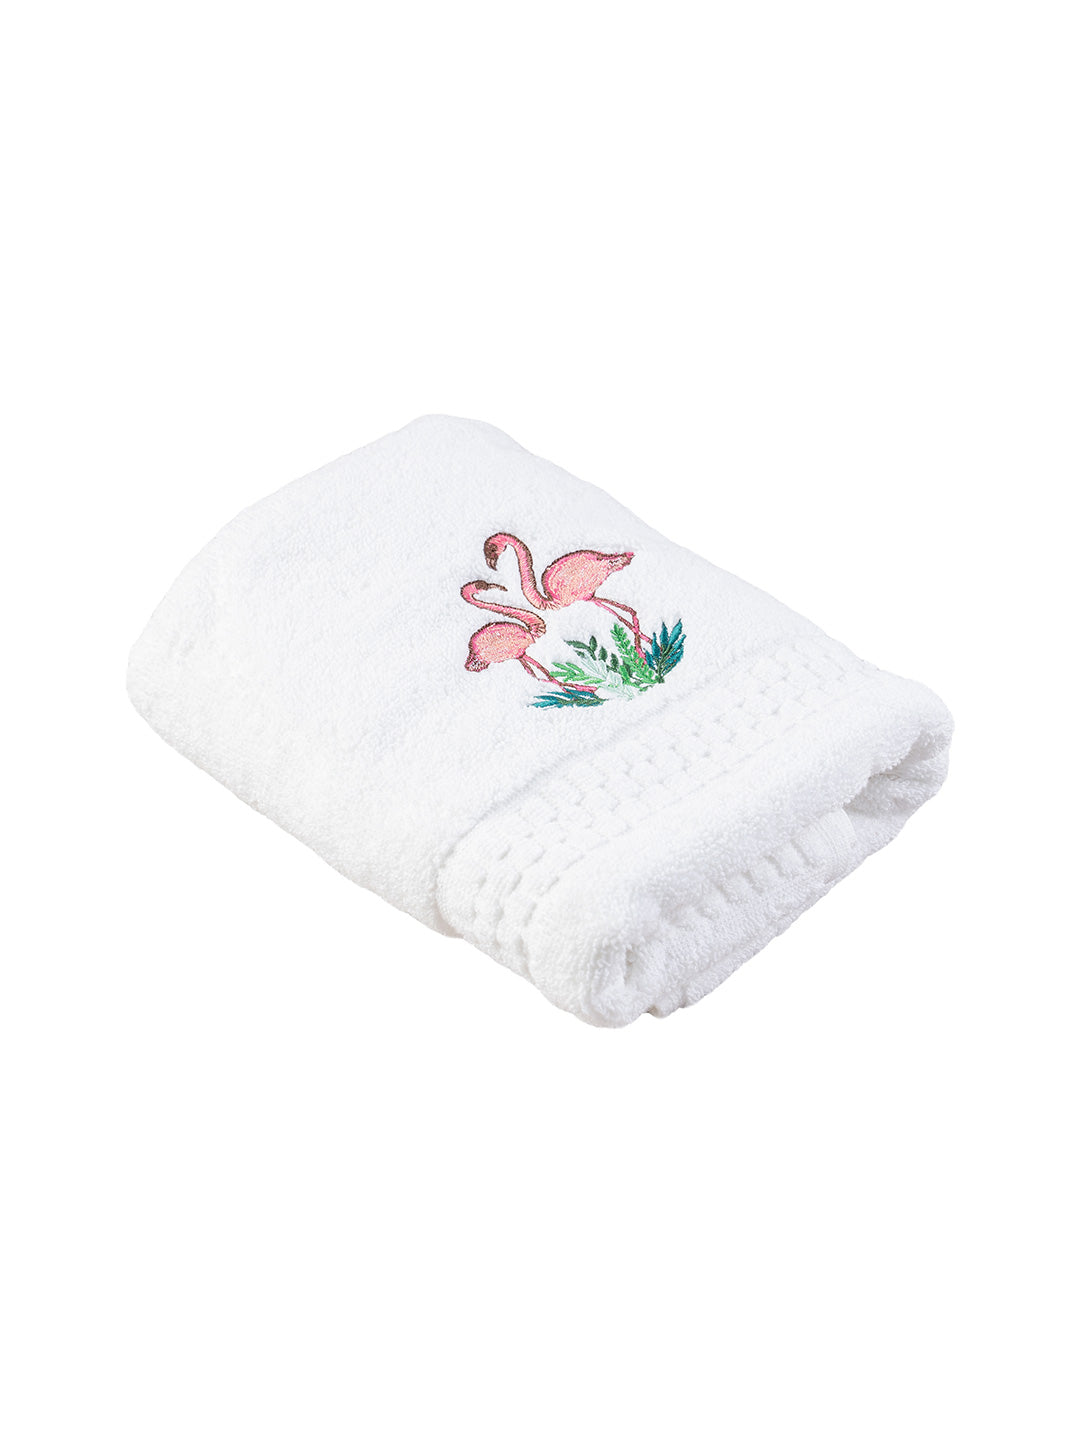 Hand Towels - Tropical Flamingos